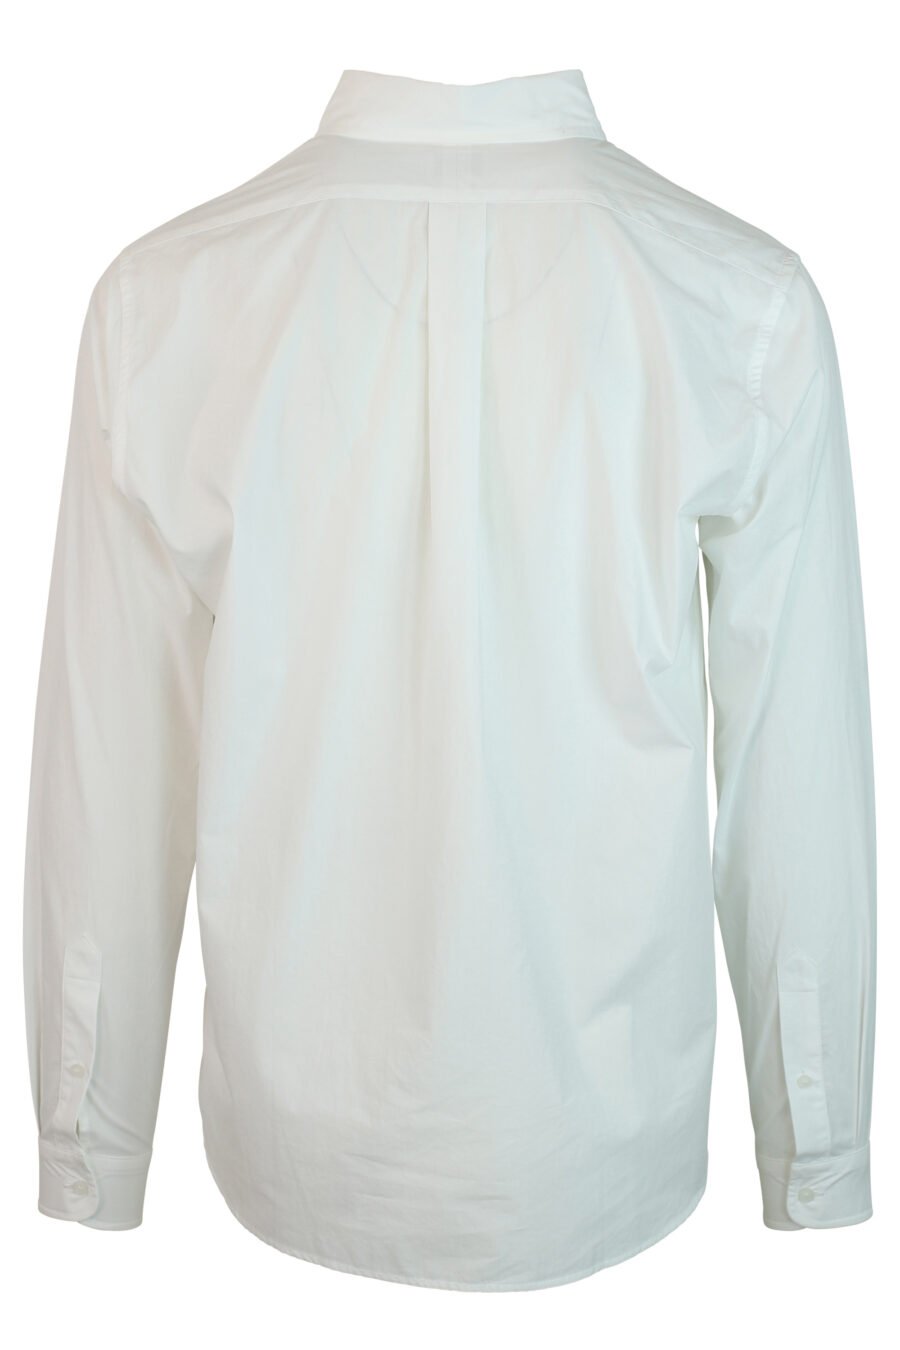 Camisa blanca con minilogo "boke flowers" - 3612230406605 2